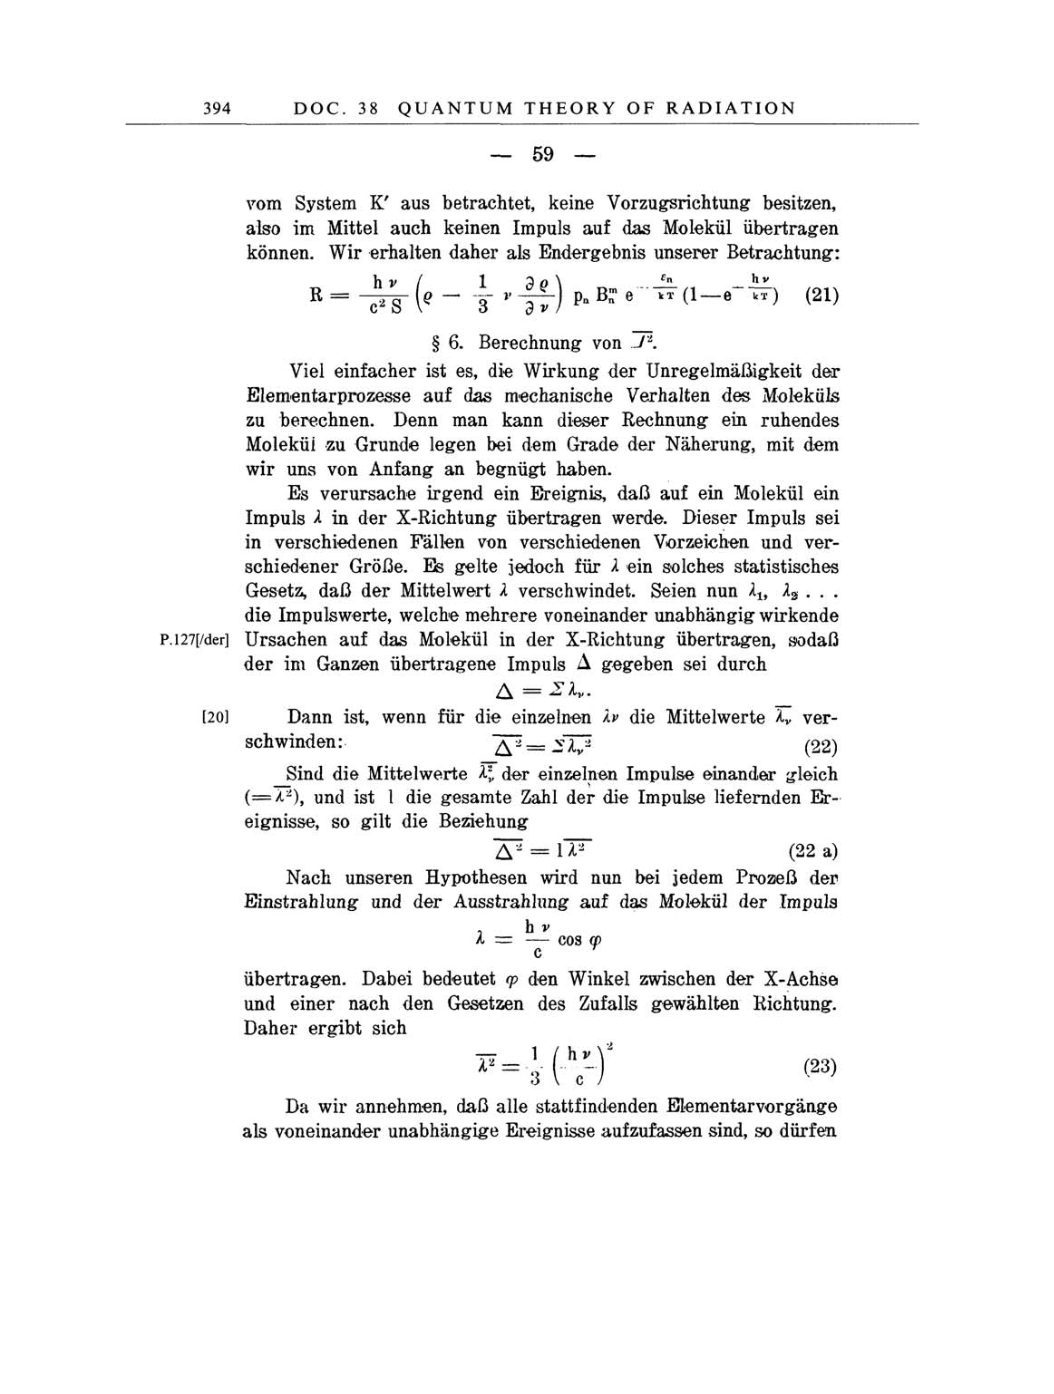 Volume 6: The Berlin Years: Writings, 1914-1917 page 394